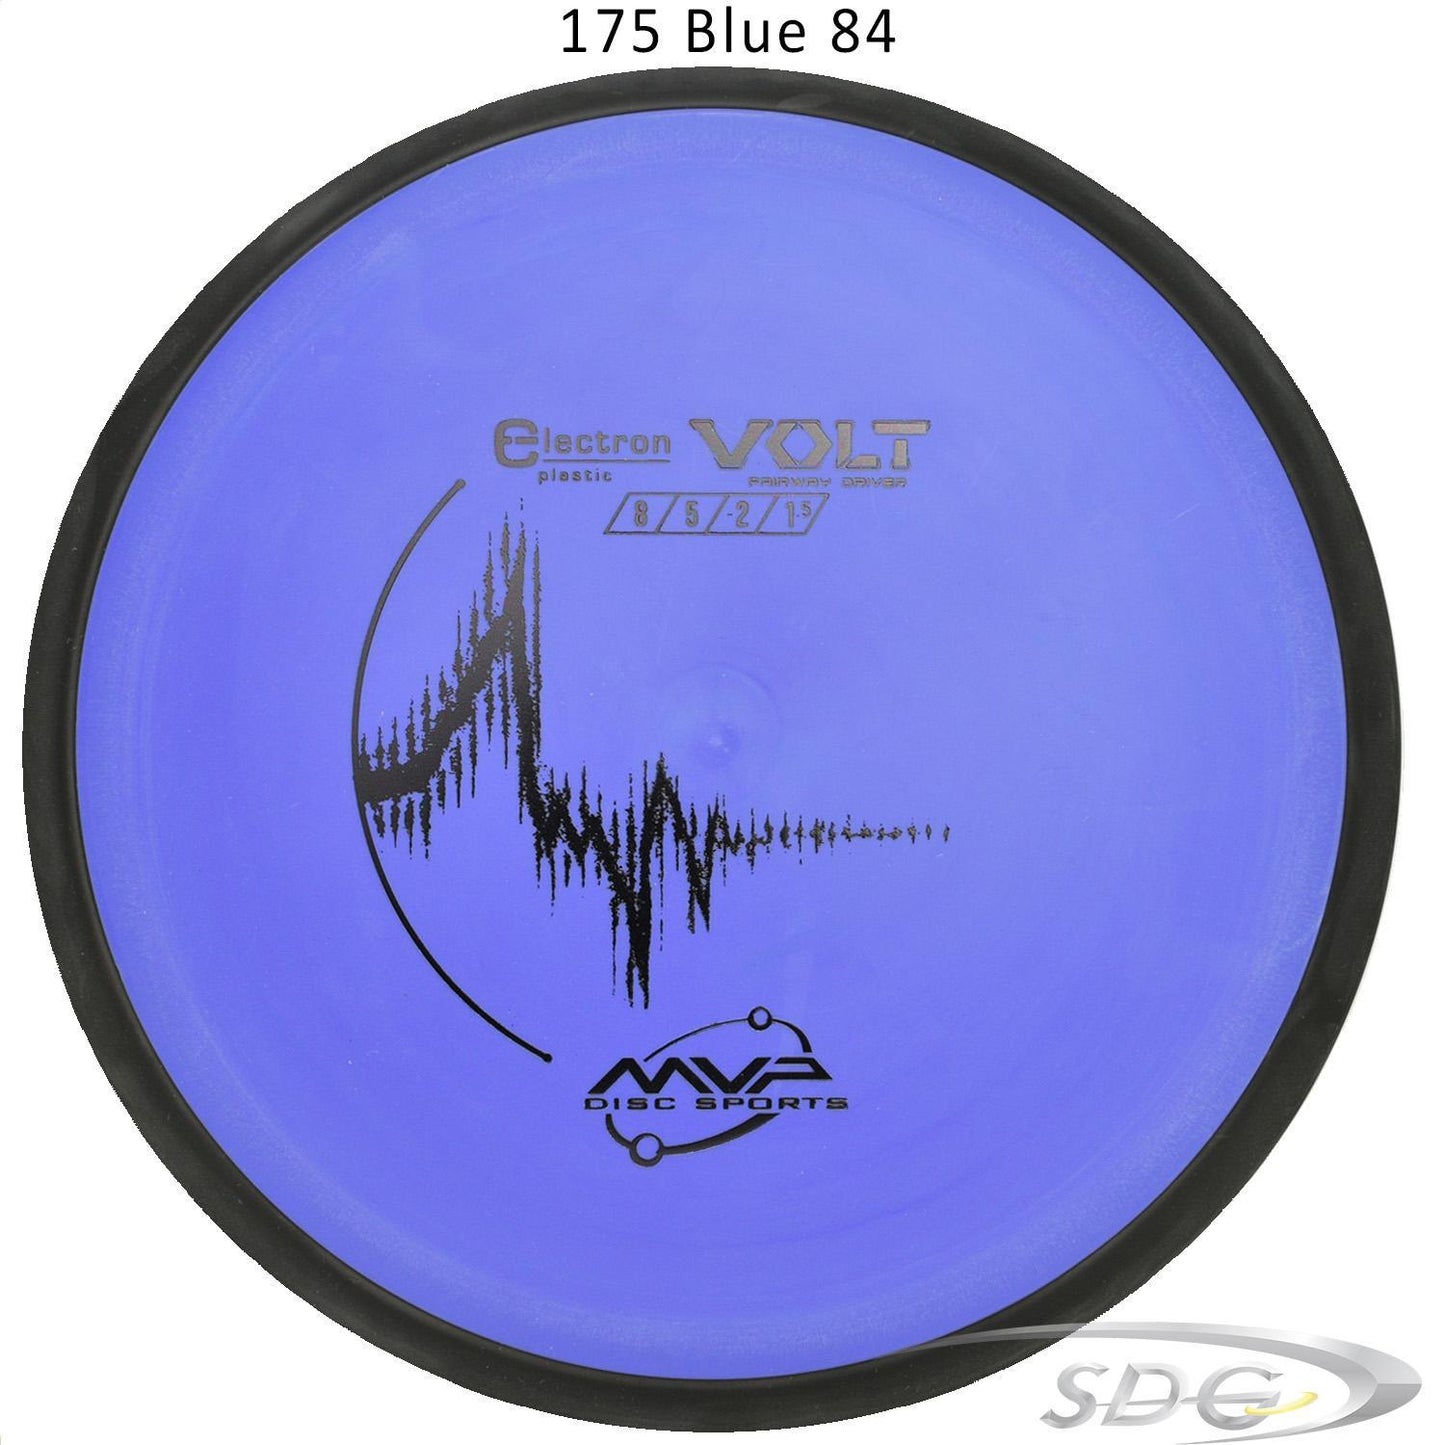 mvp-electron-volt-disc-golf-fairway-driver 175 Blue 84 